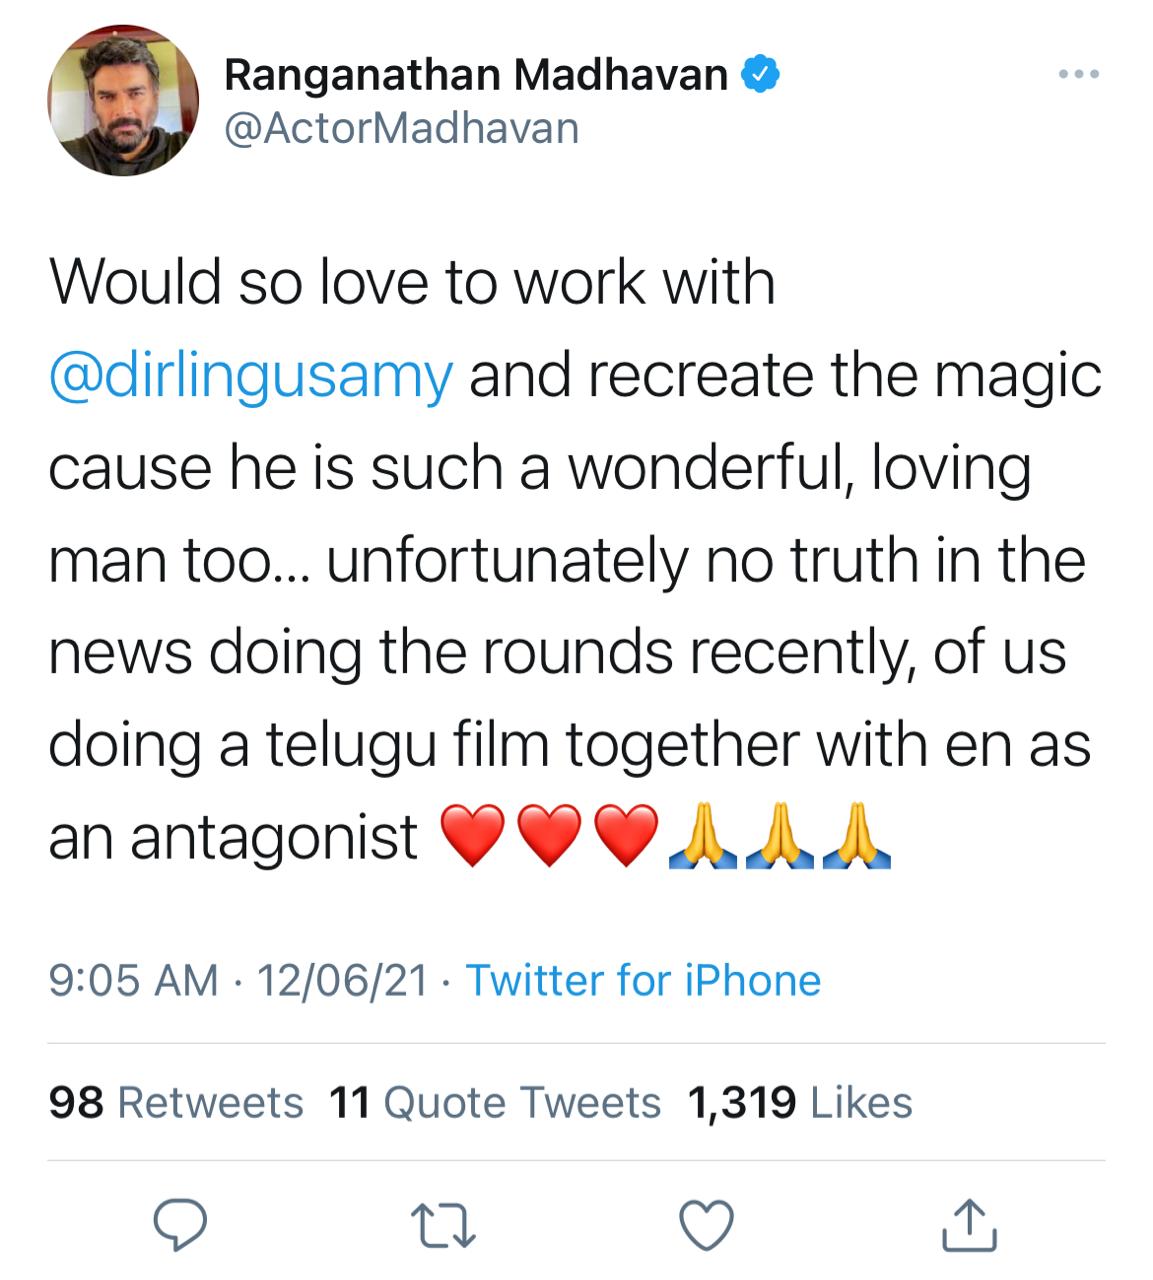 Madhavan's message on Twitter.